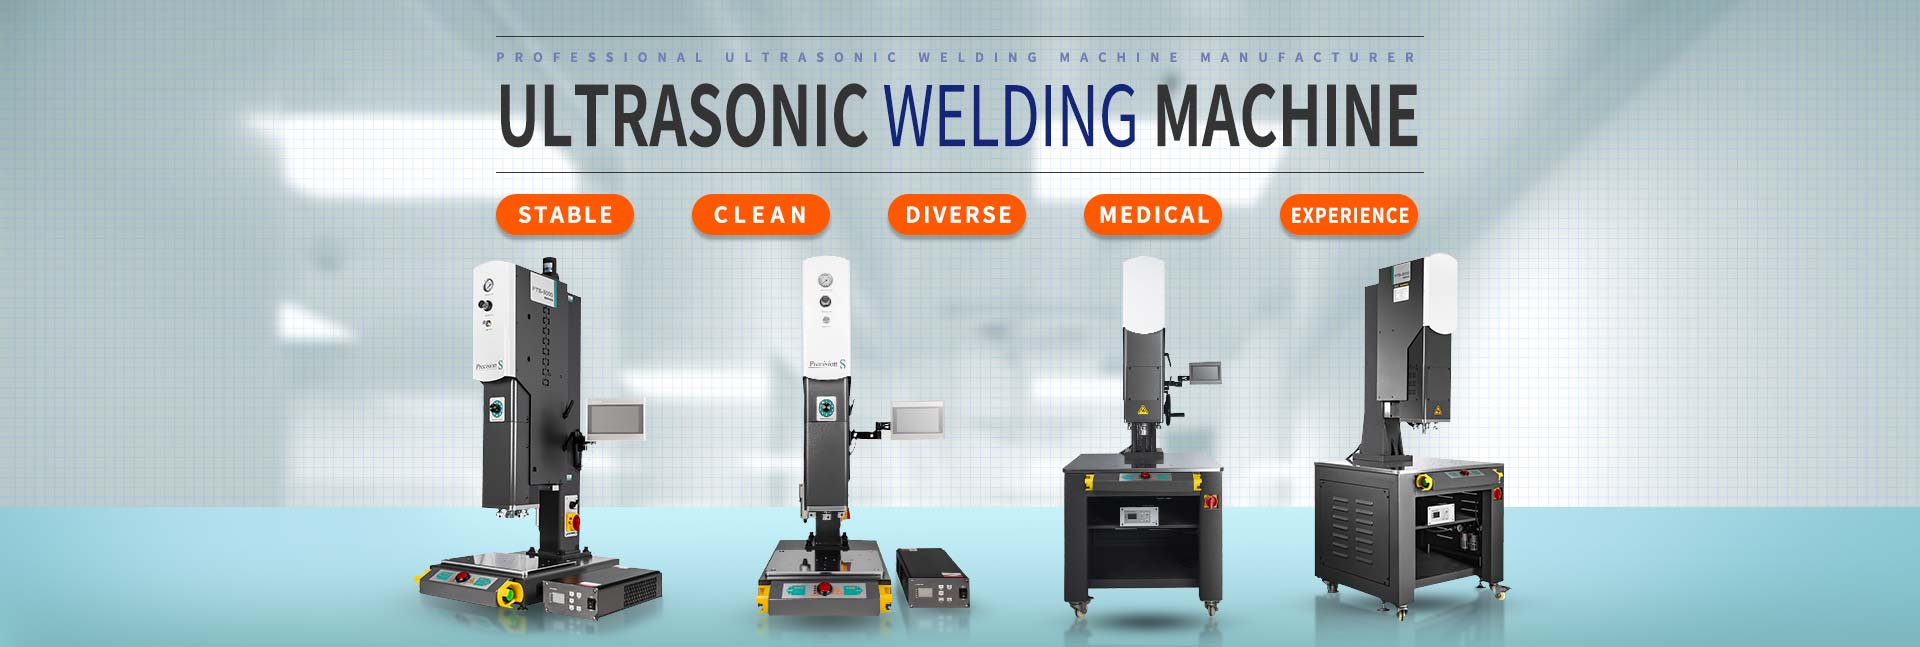 Ultrasonic welding machine manufacturers